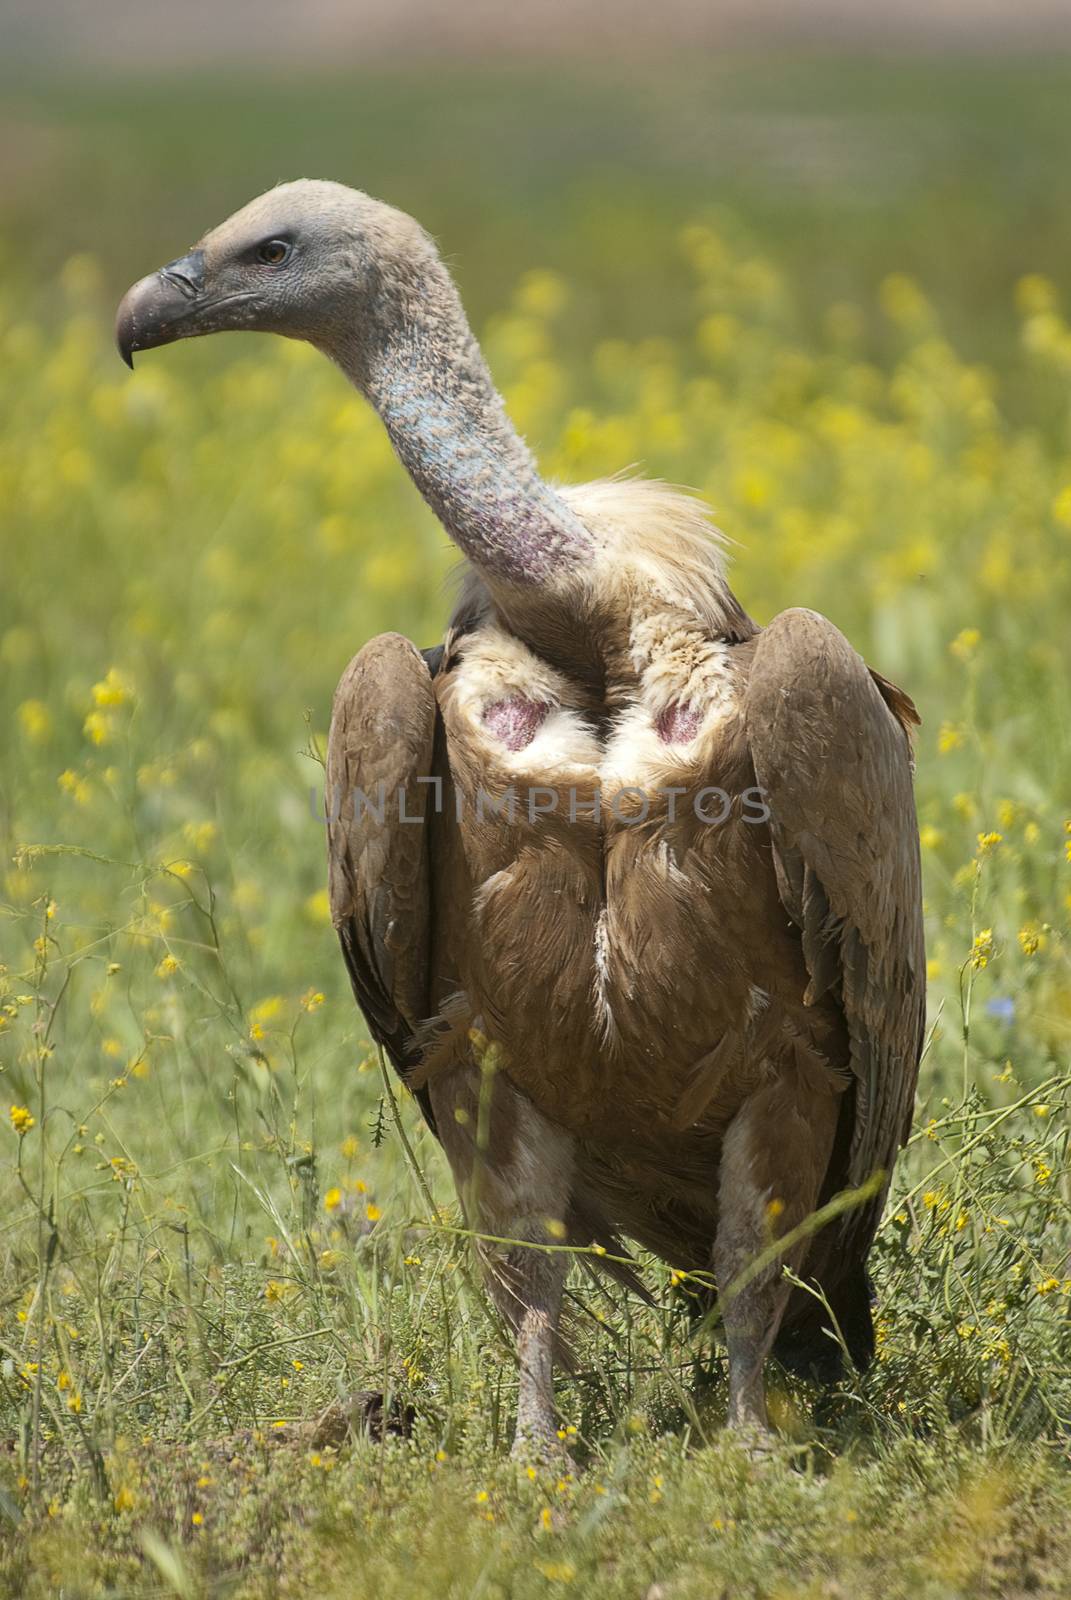 Griffon Vulture (Gyps fulvus) close-up, eyes and beak